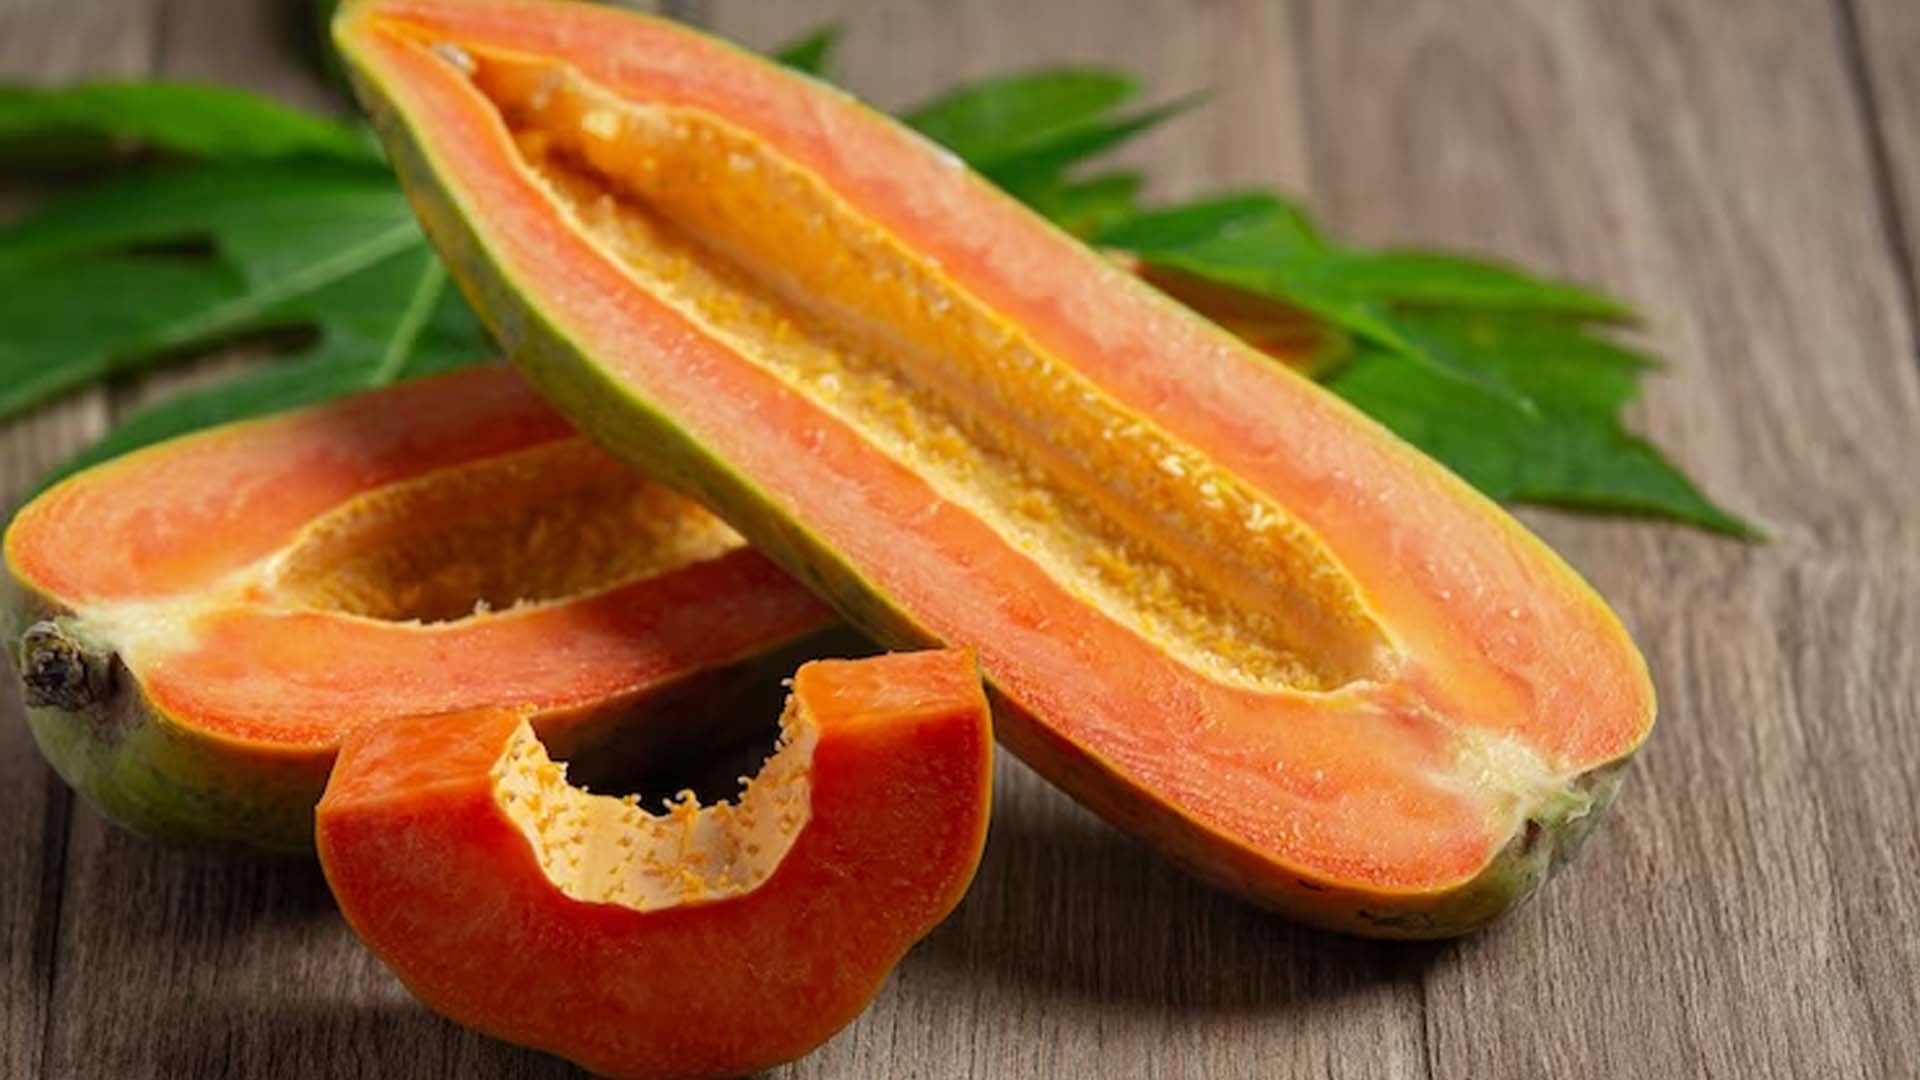 Does Papaya Cause Periods?